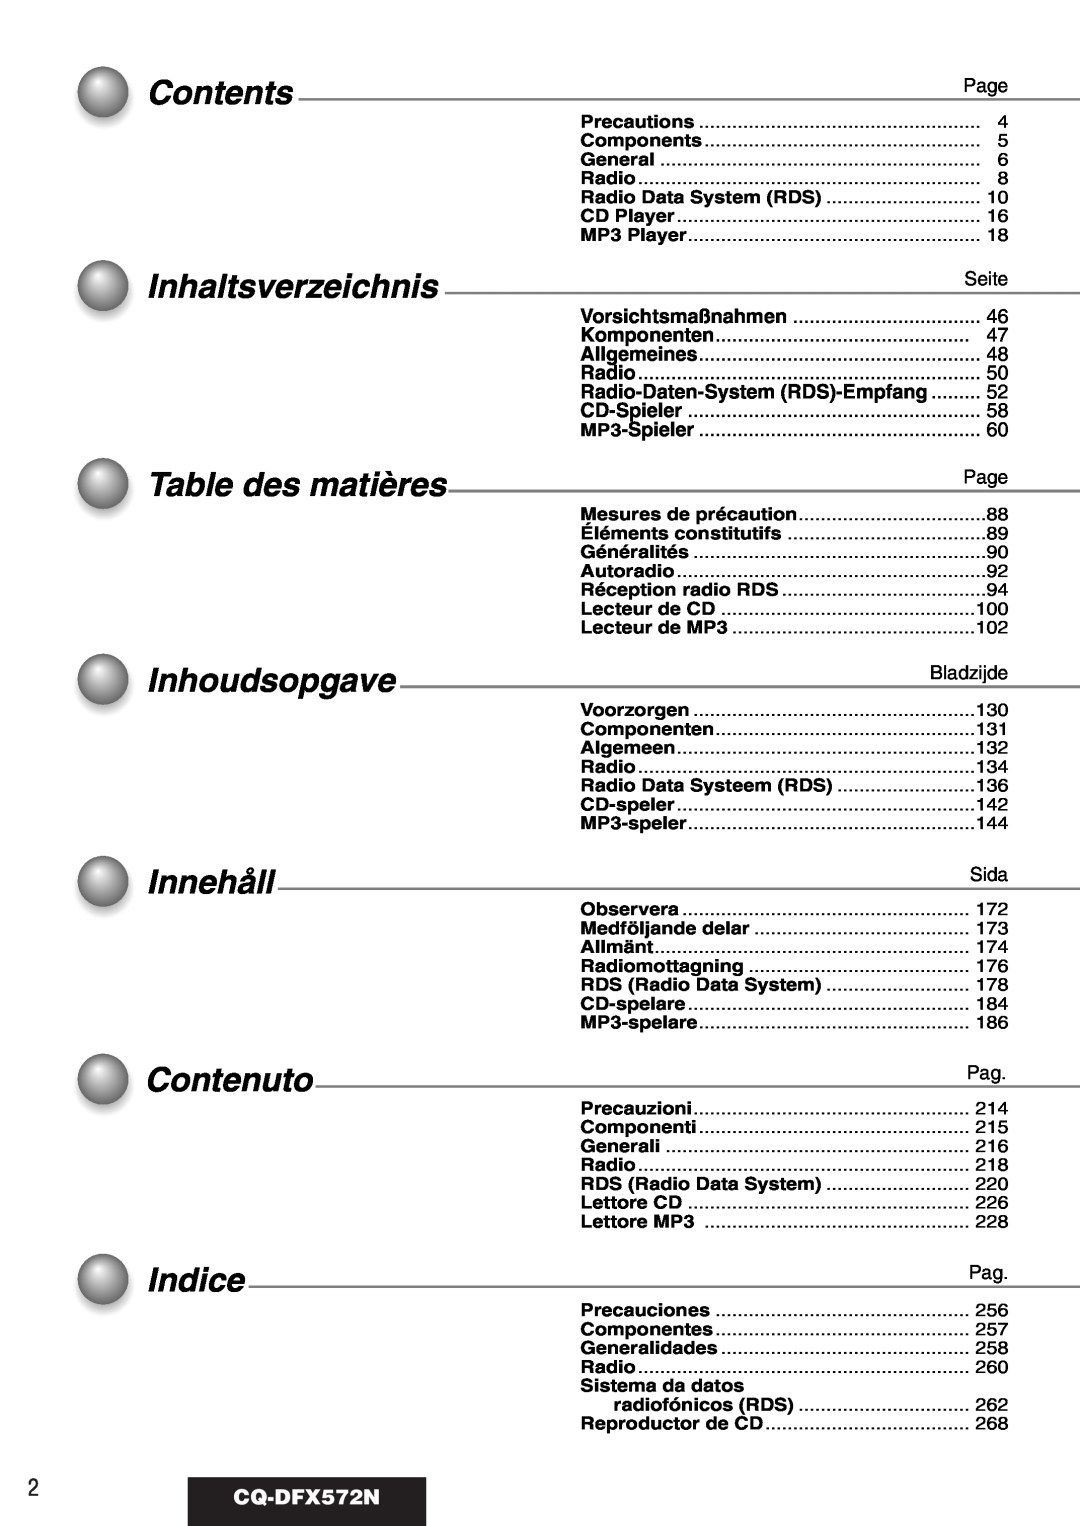 Panasonic 2CQ-DFX572N, Contents, Inhaltsverzeichnis, Table des matières, Inhoudsopgave, Innehåll, Contenuto Indice 